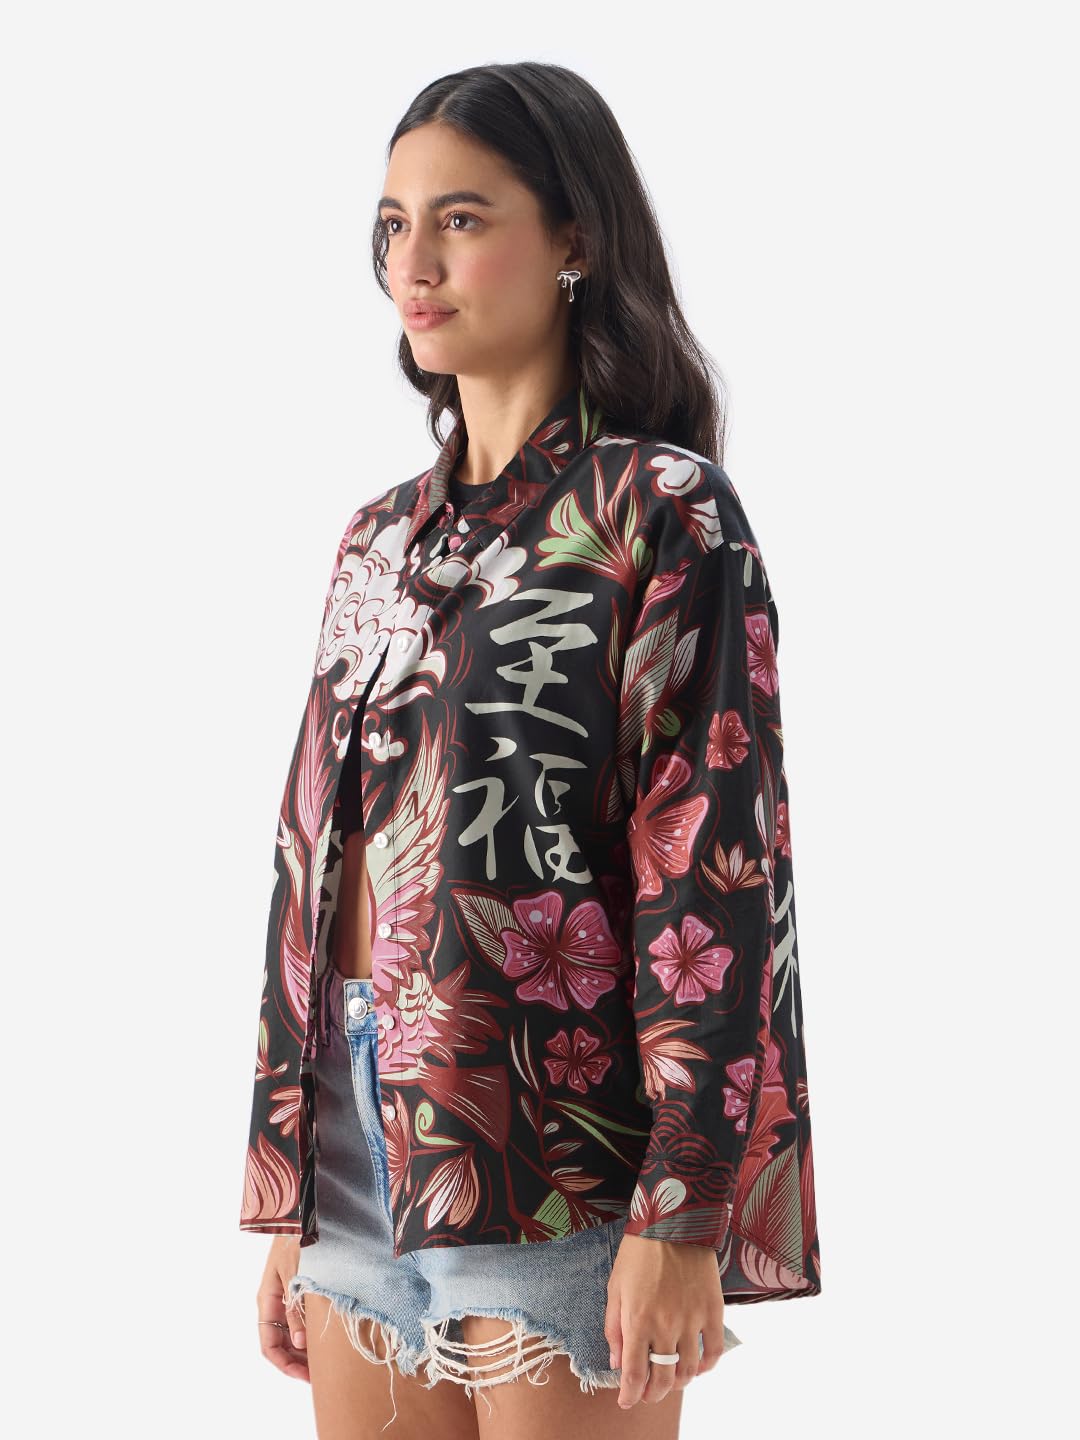 The Souled Store Konnichiwa Women and Girls Long Sleeve Button Down 100% Cotton Boyfriend Fit Shirts Multicolour